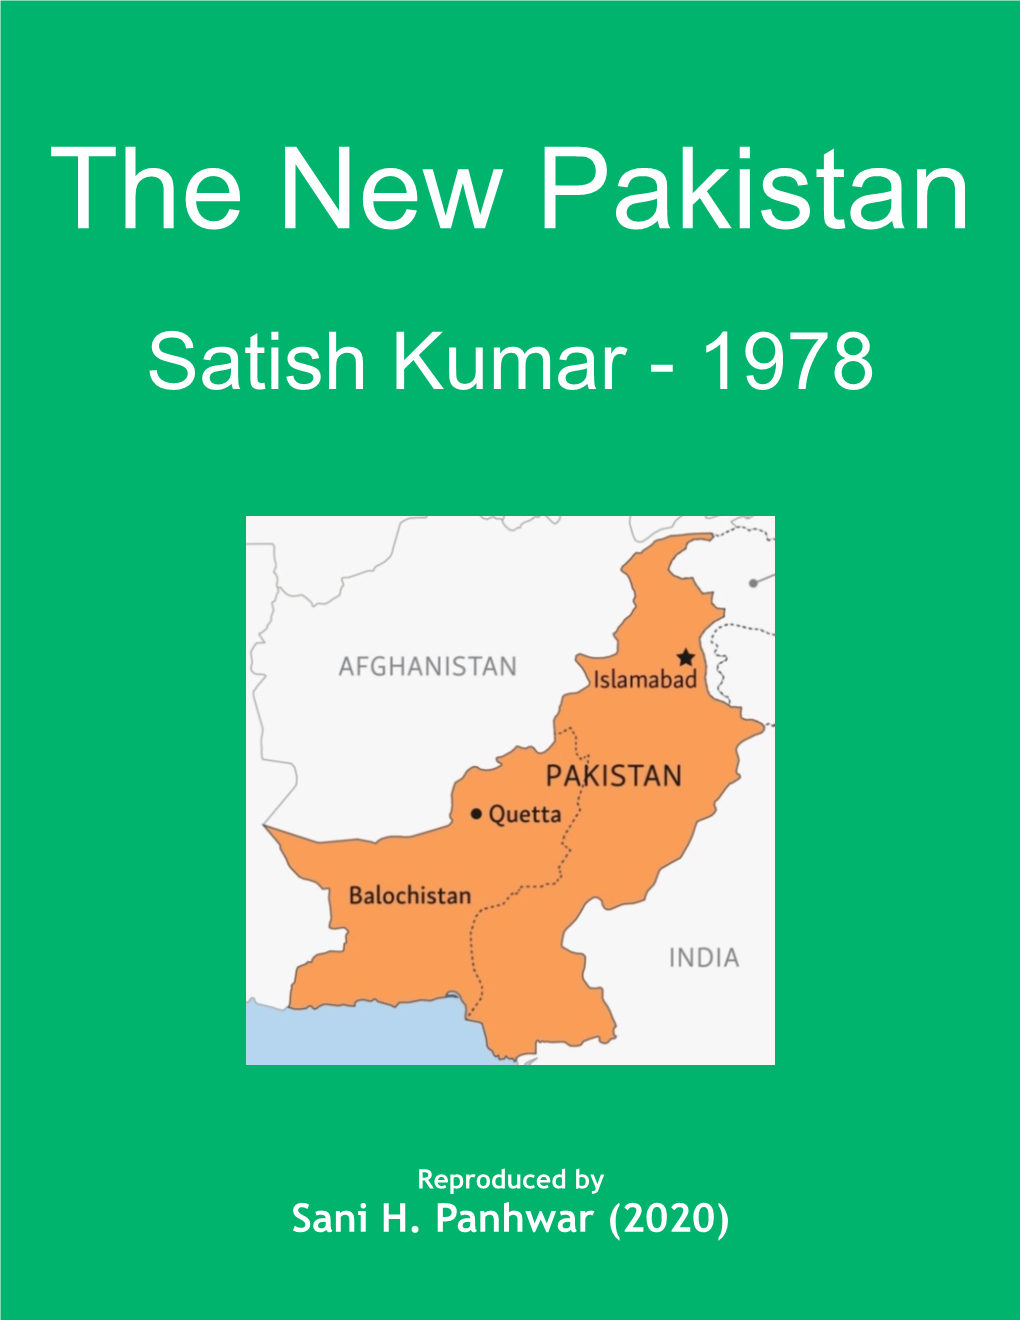 The New Pakistan by Satish Kumar